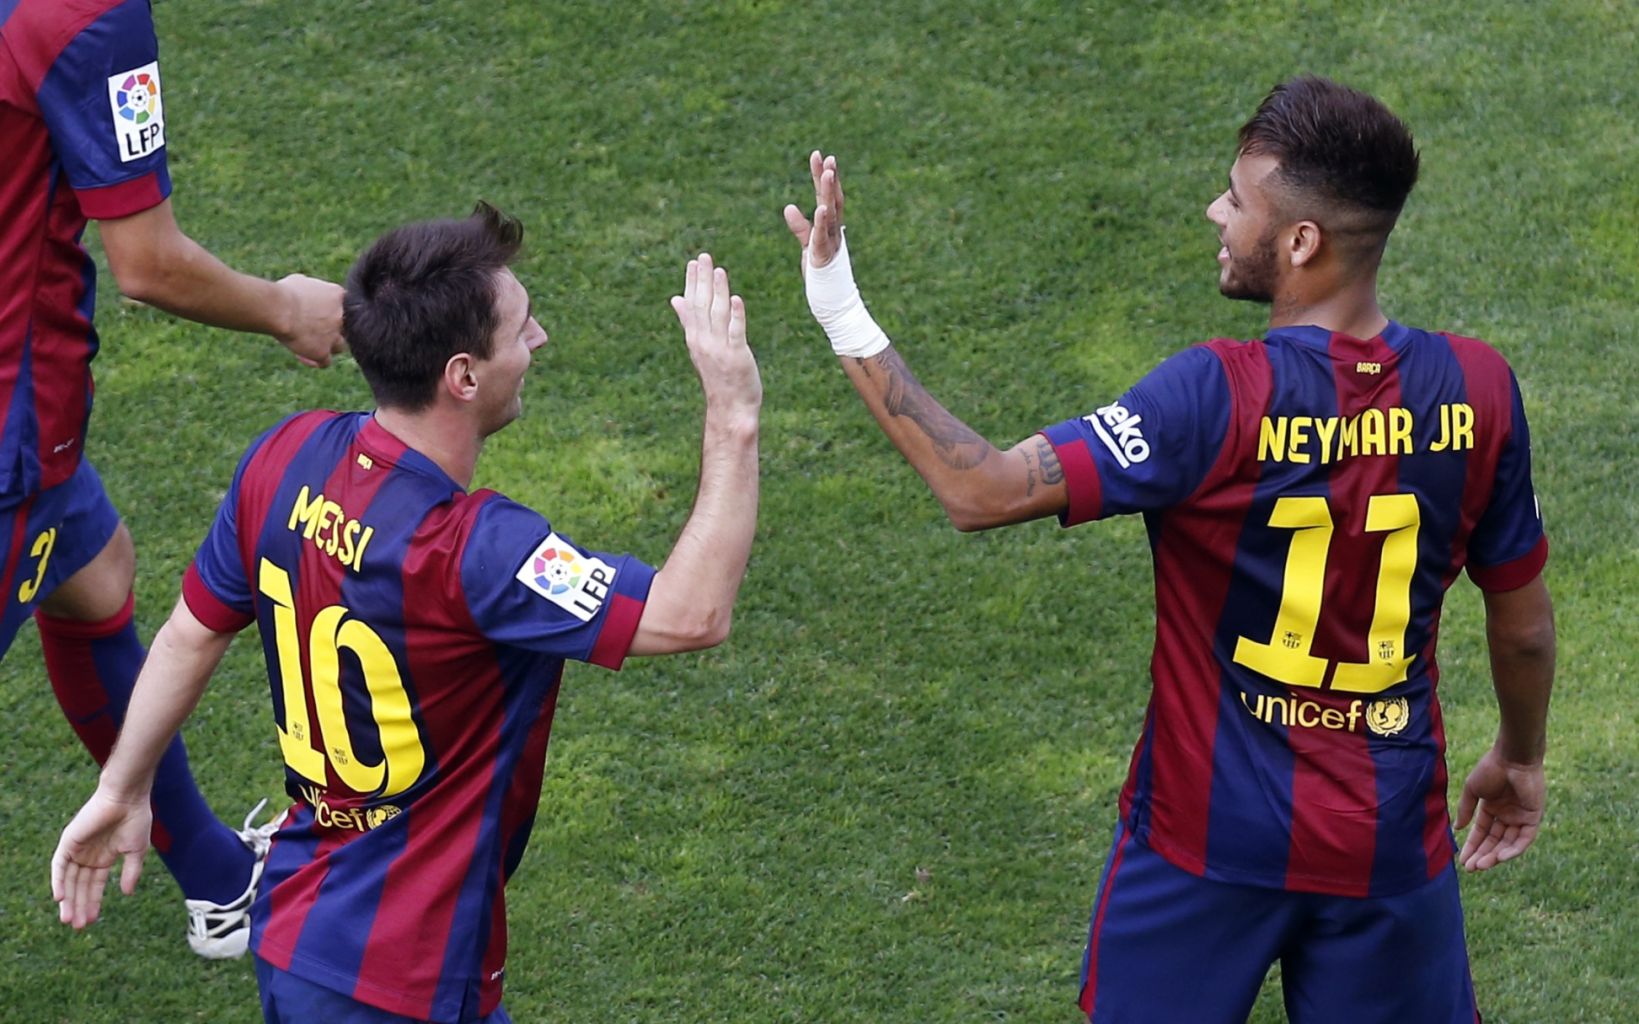 Messi and Neymar celebrating a goal